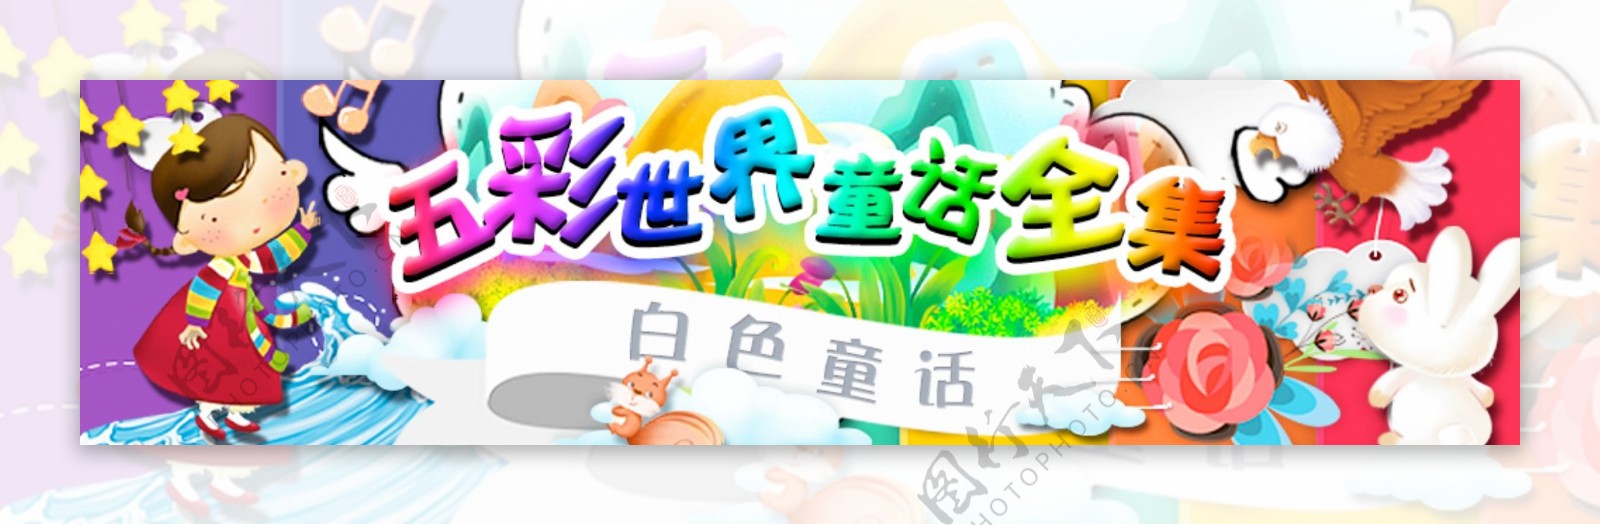 五彩世界童话卡通banner